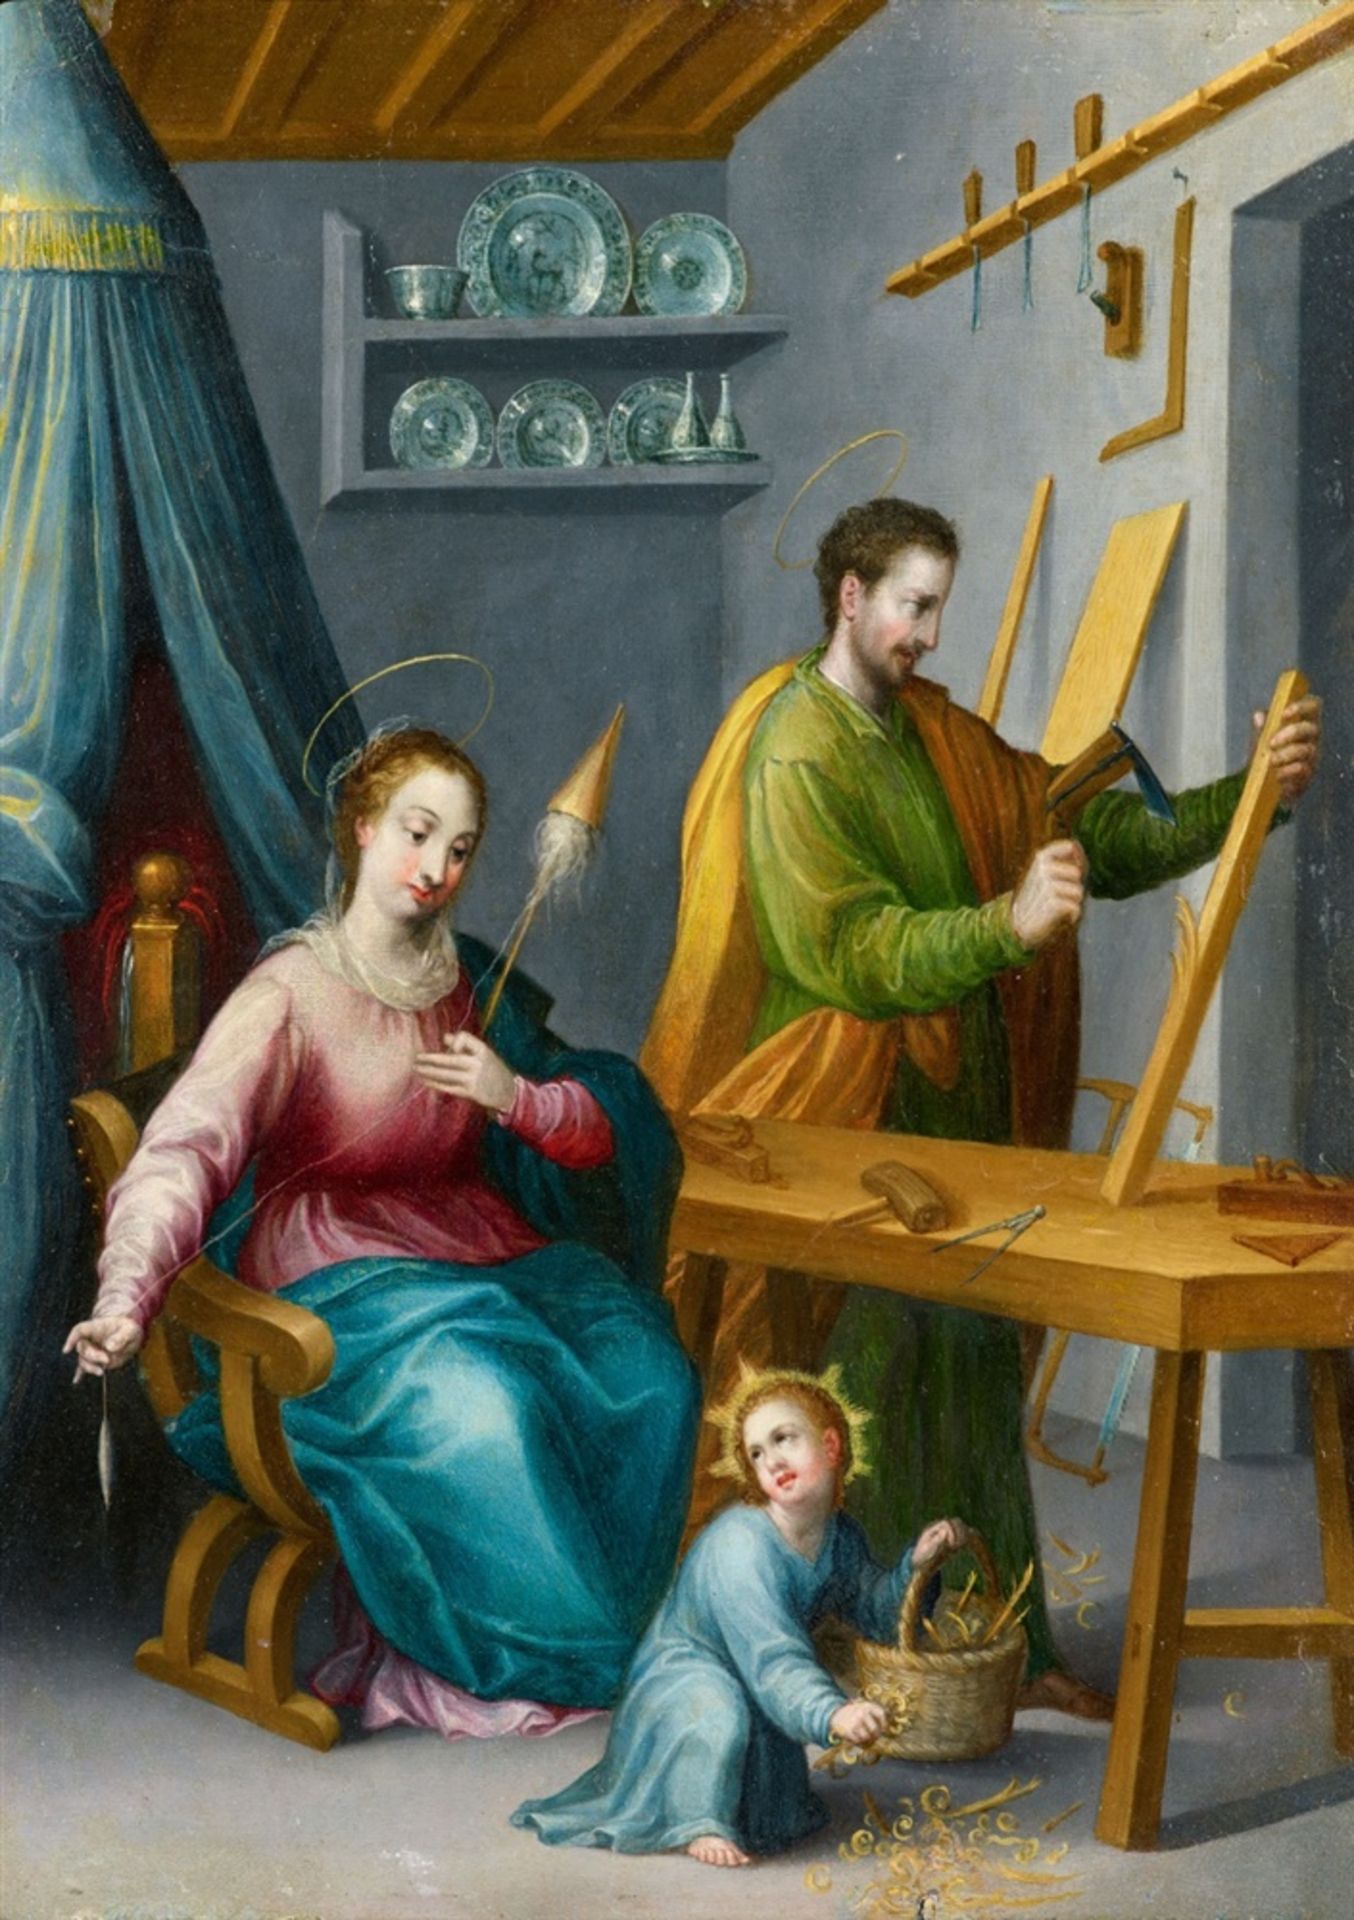 Sigismondo LaireThe Virgin and Child with Saint Joseph as a CarpenterOil on copper. 26 x 19 cm.